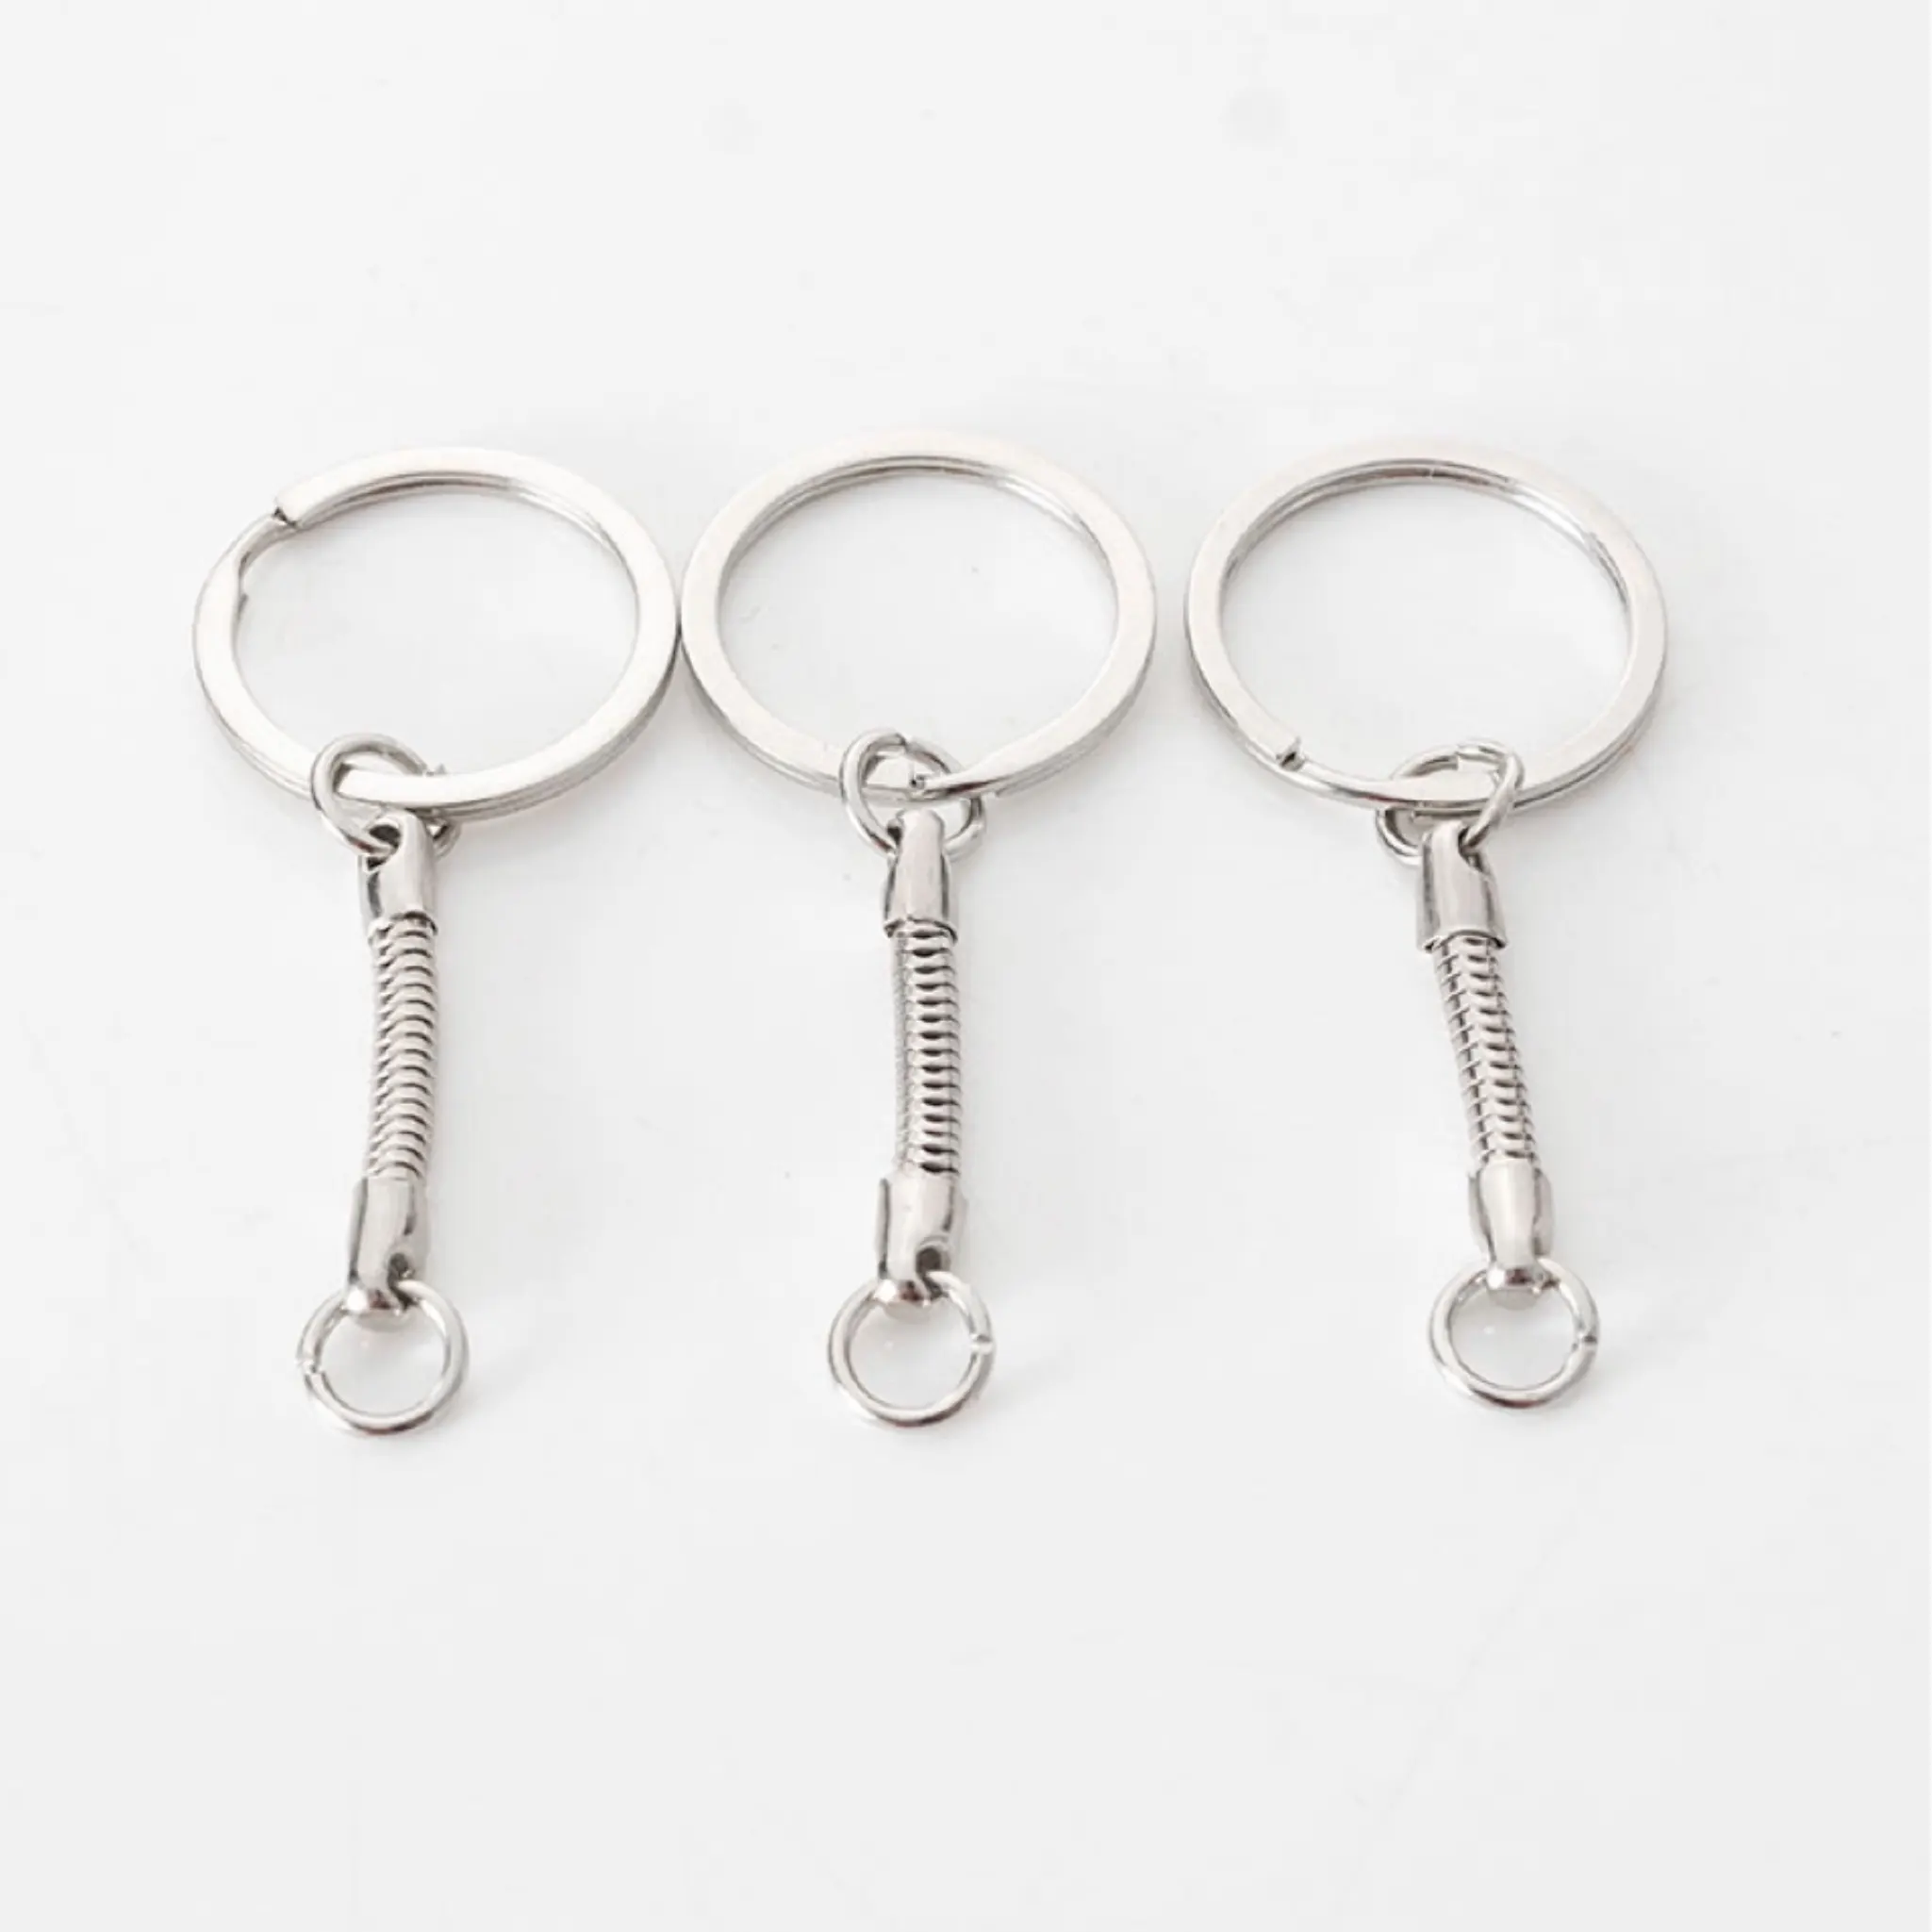 Metal Snake-Bone Link Chain Keychain Flat Split Key Ring Keychain Holders Drop-Proof U Disk DIY Accessories Jewelry Findings